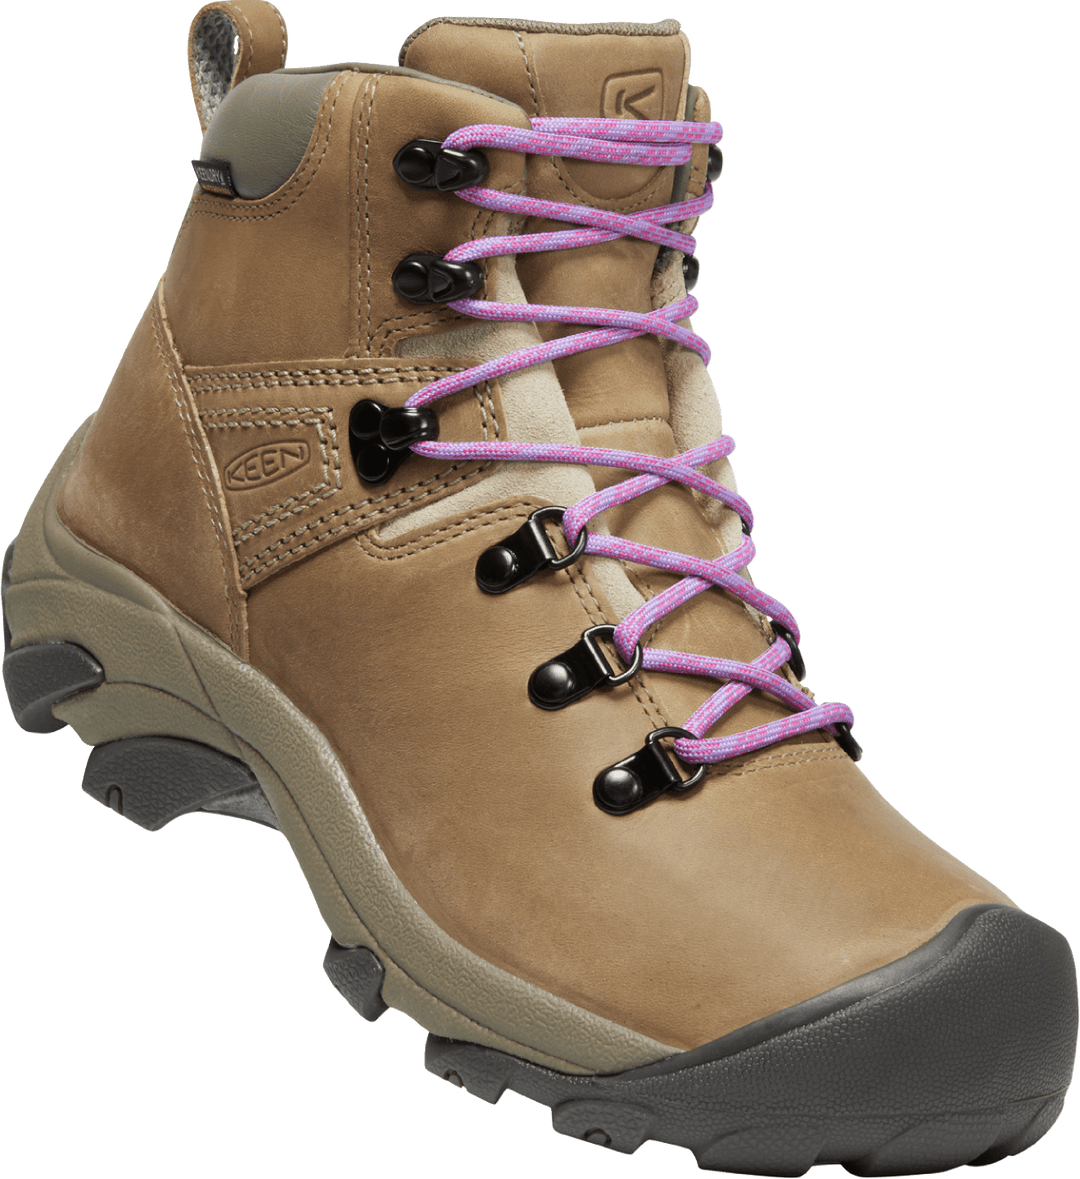 Keen Women's Pyrenees Hiking Boots - Safari / English Lavender